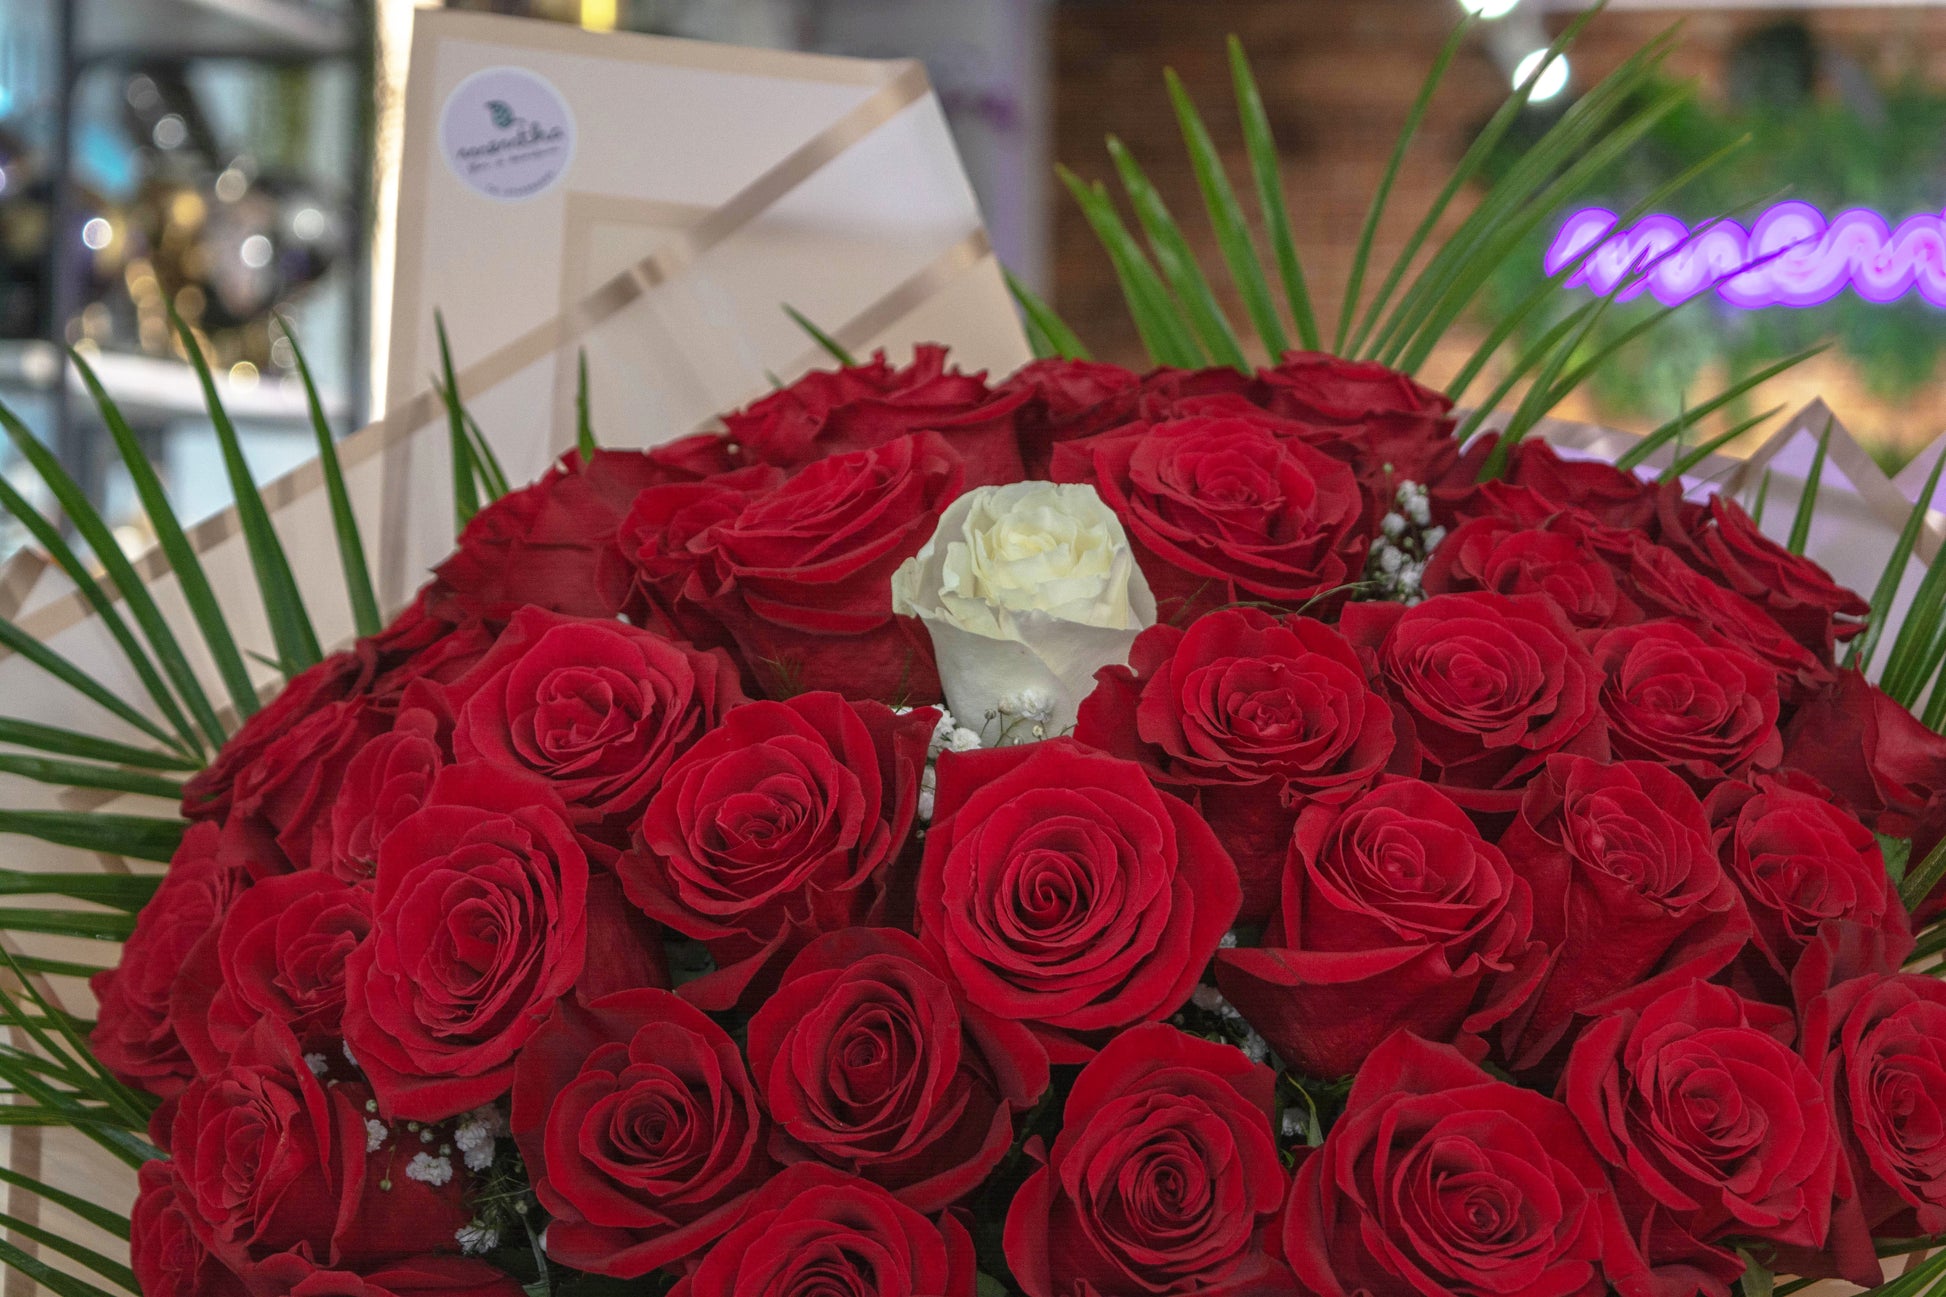 Buchet luxuriant cu 81 trandafiri și livrare GRATUITĂ Trandafiri roșii și albi în buchet de 81 cu livrare GRATUITĂ Livrare rapidă și GRATUITĂ pentru buchetul de 81 trandafiri în Resita Flori proaspete și parfumate cu livrare GRATUITĂ în Resita Aranjament floral elegant pentru livrare GRATUITĂ în Resita cu 81 trandafiri